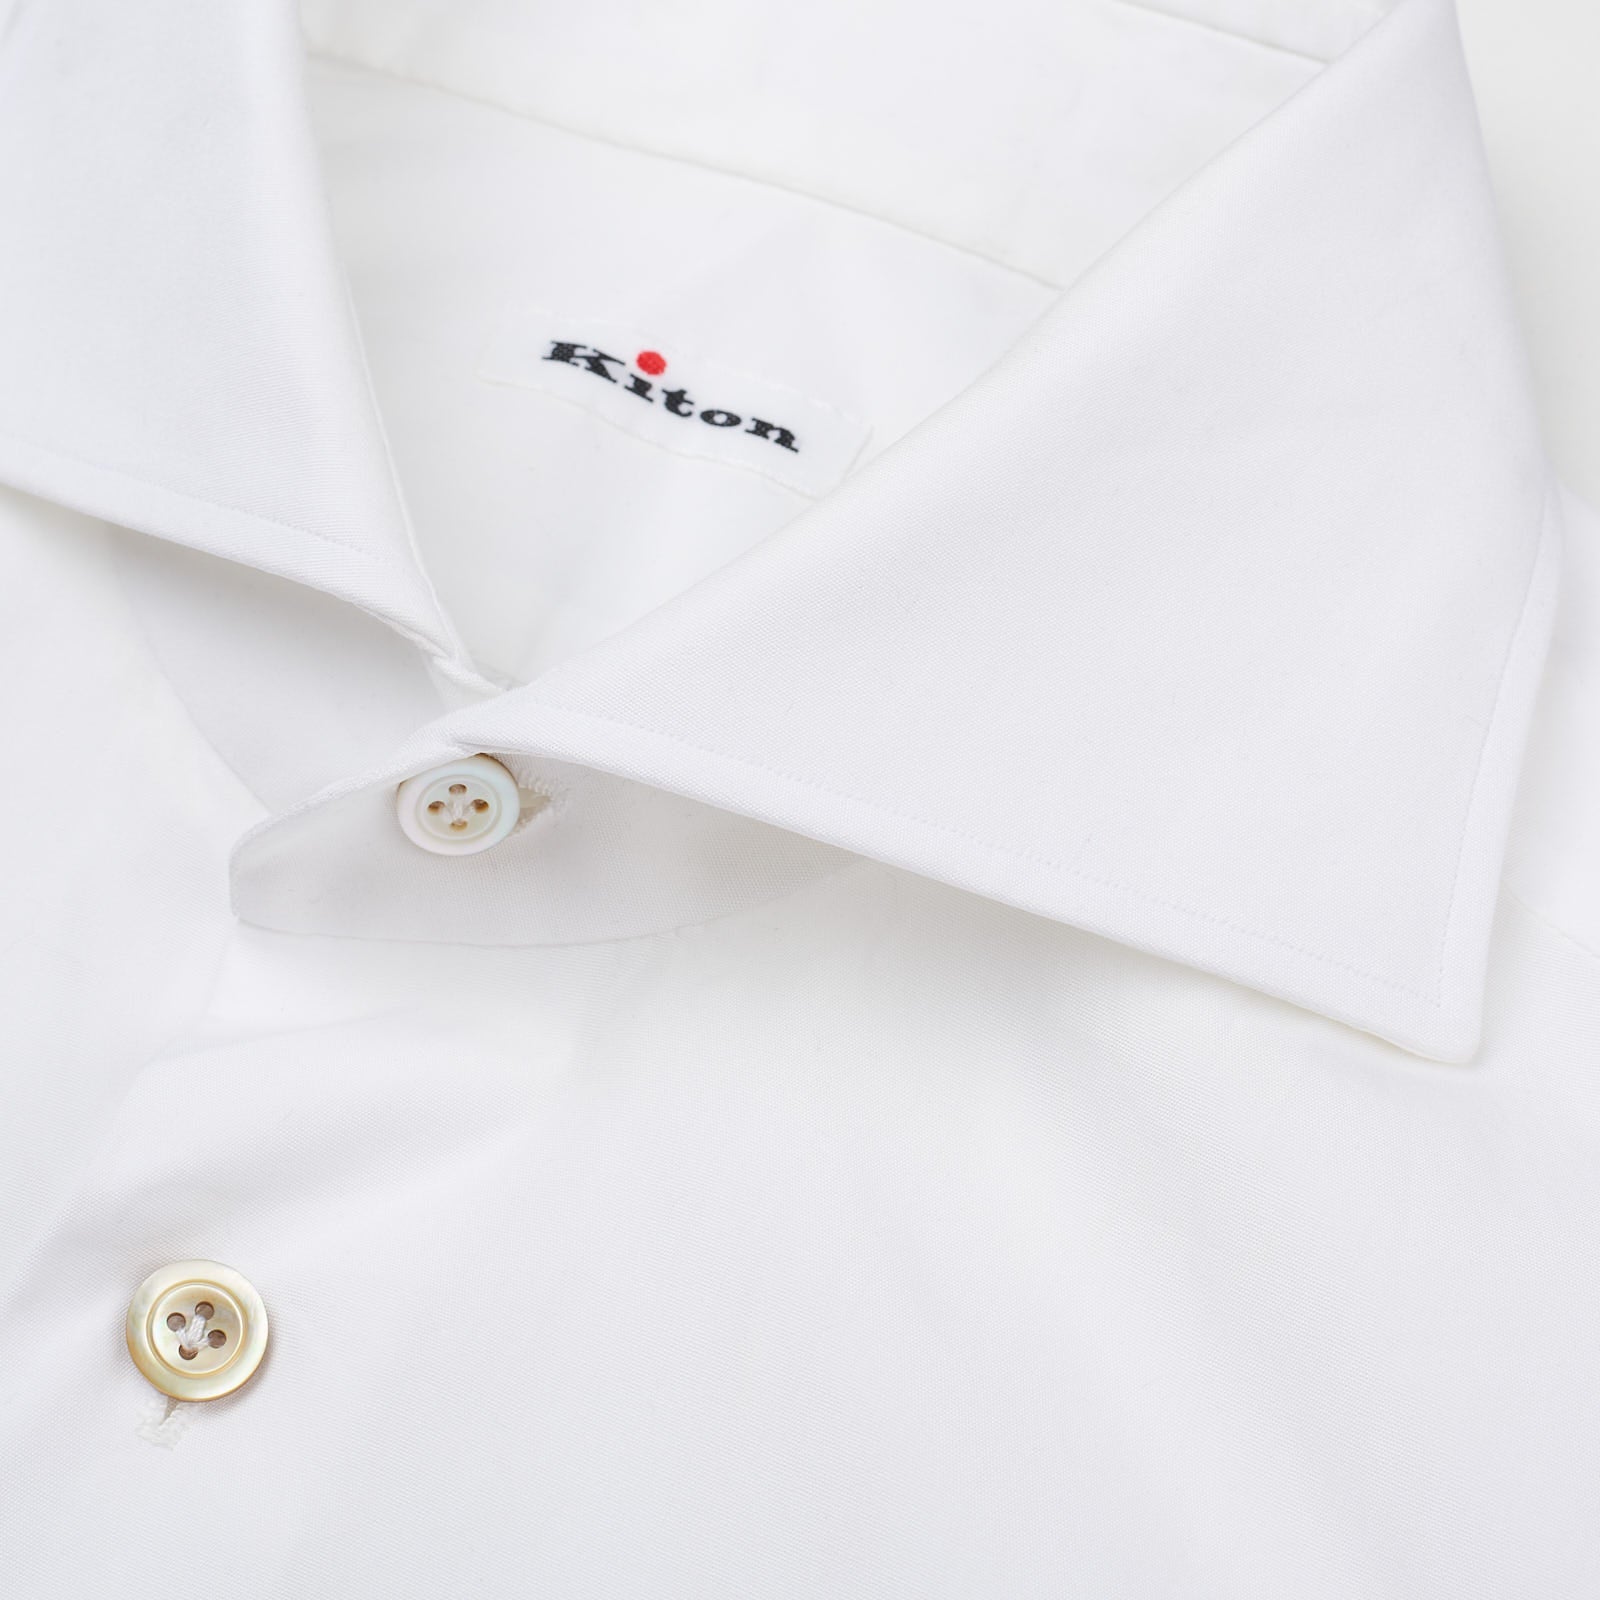 KITON Napoli Handmade Bespoke White Cotton Poplin Dress Shirt EU 39 NEW US 15.5 KITON